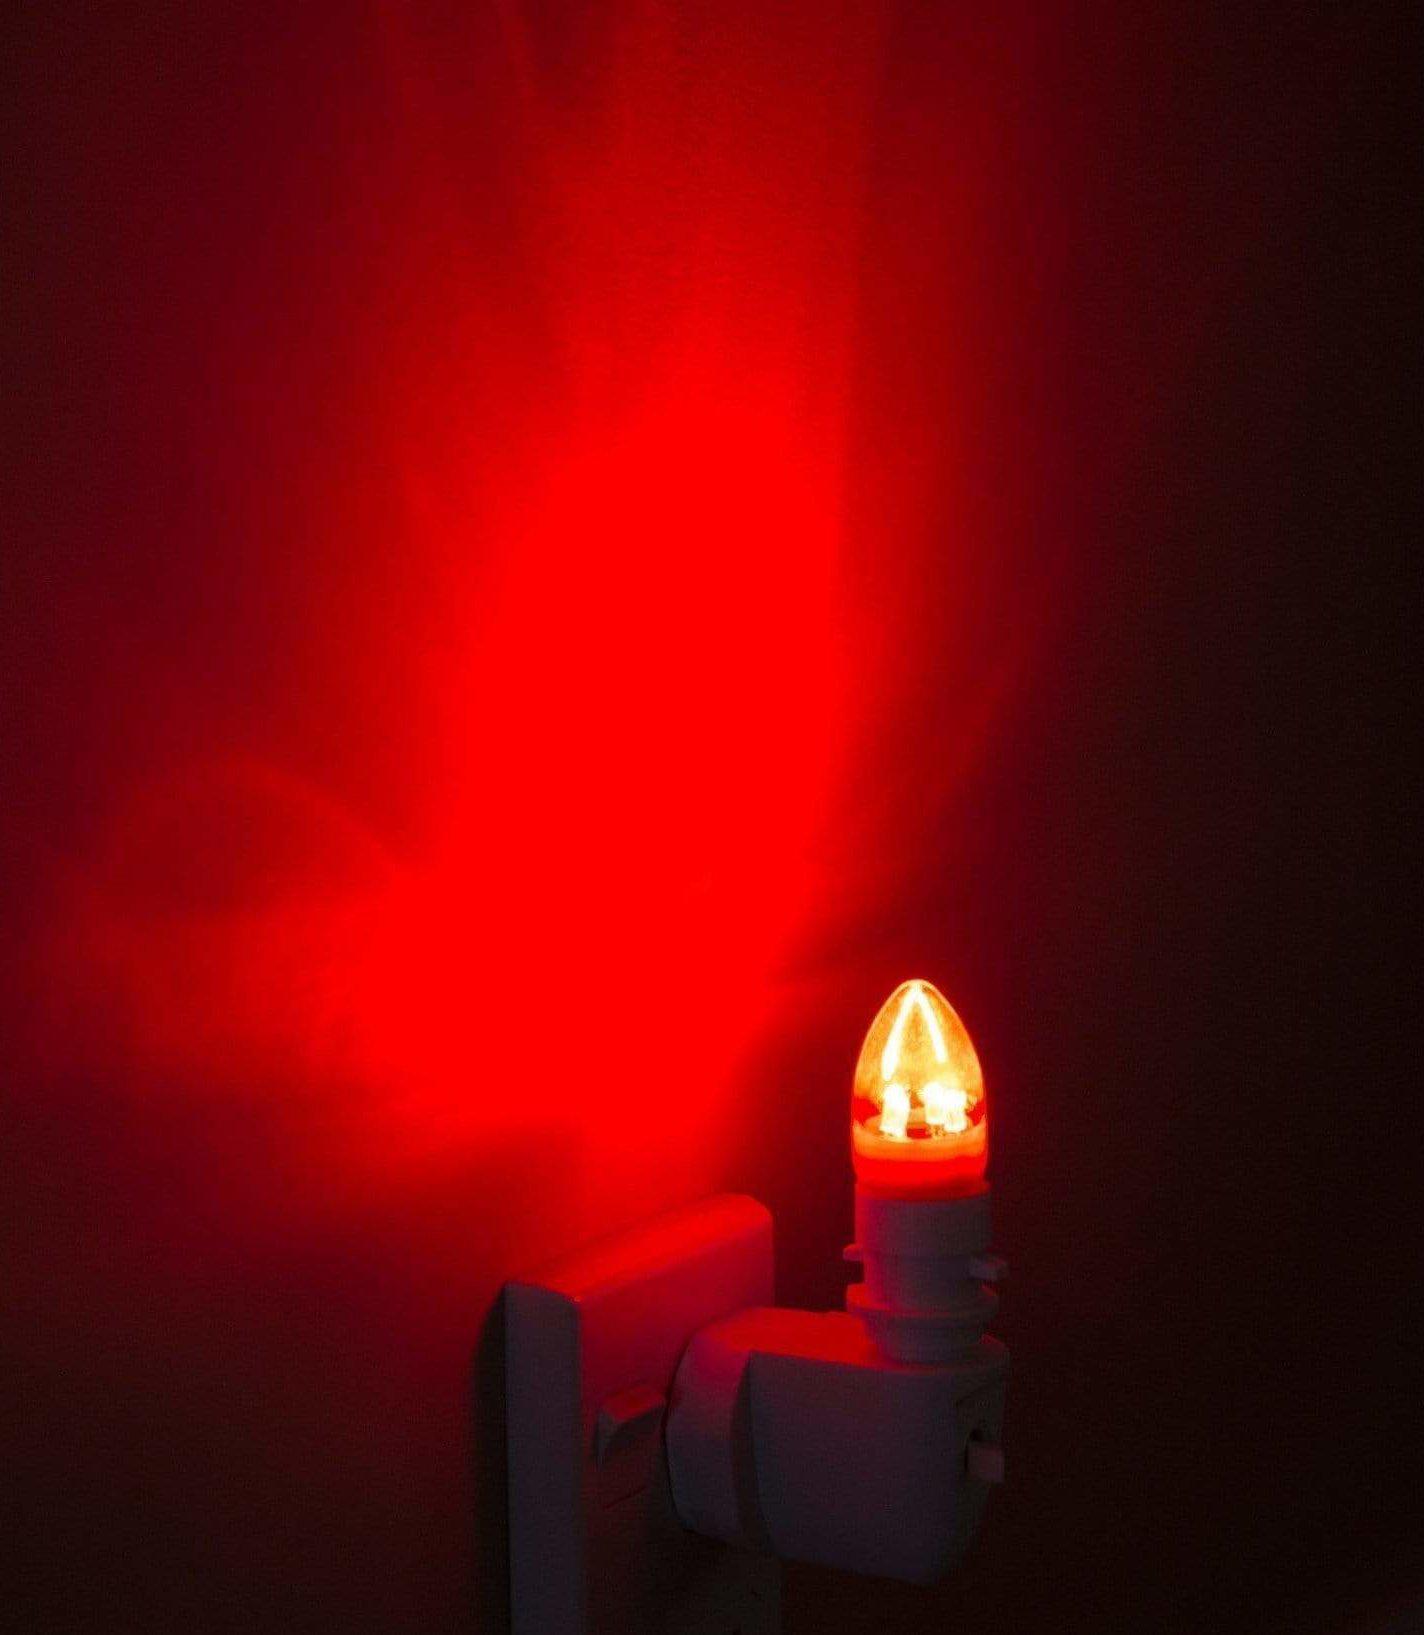 Red Plug In Night Light for Sleep-Night Lights & Light Bulbs-BlockBlueLight